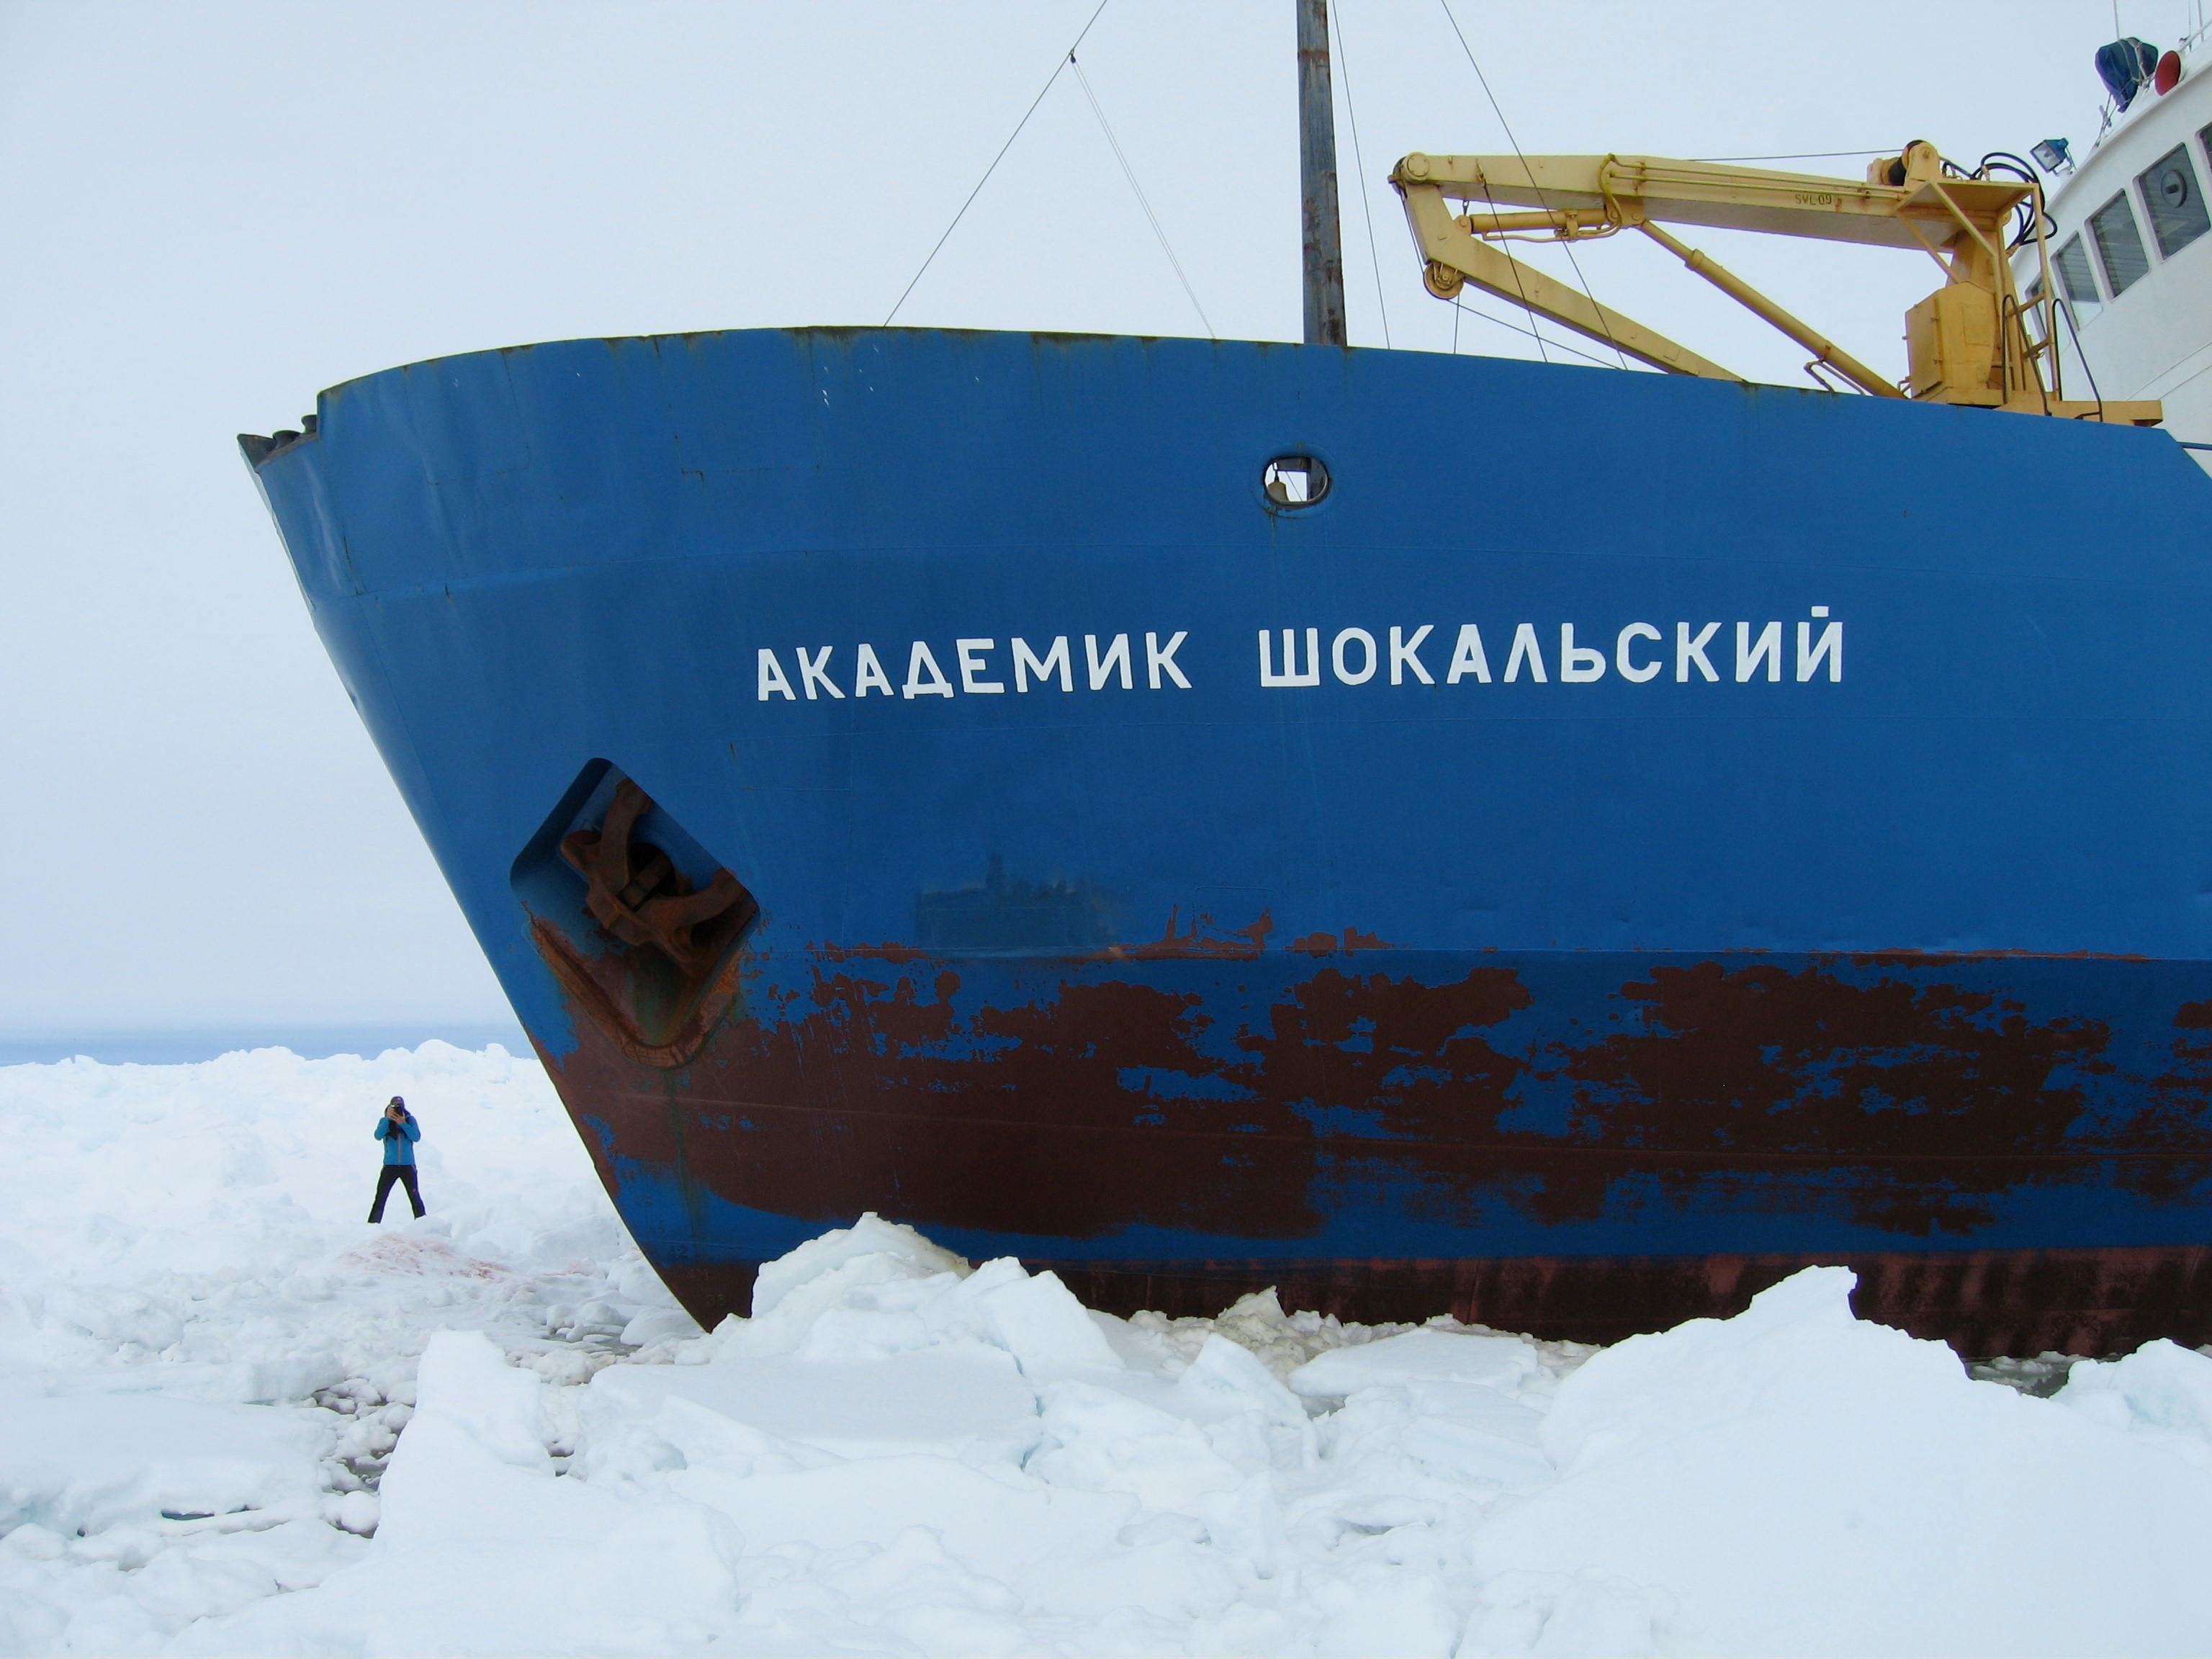 Russian icebreaker Akademik Shokalskiy. 